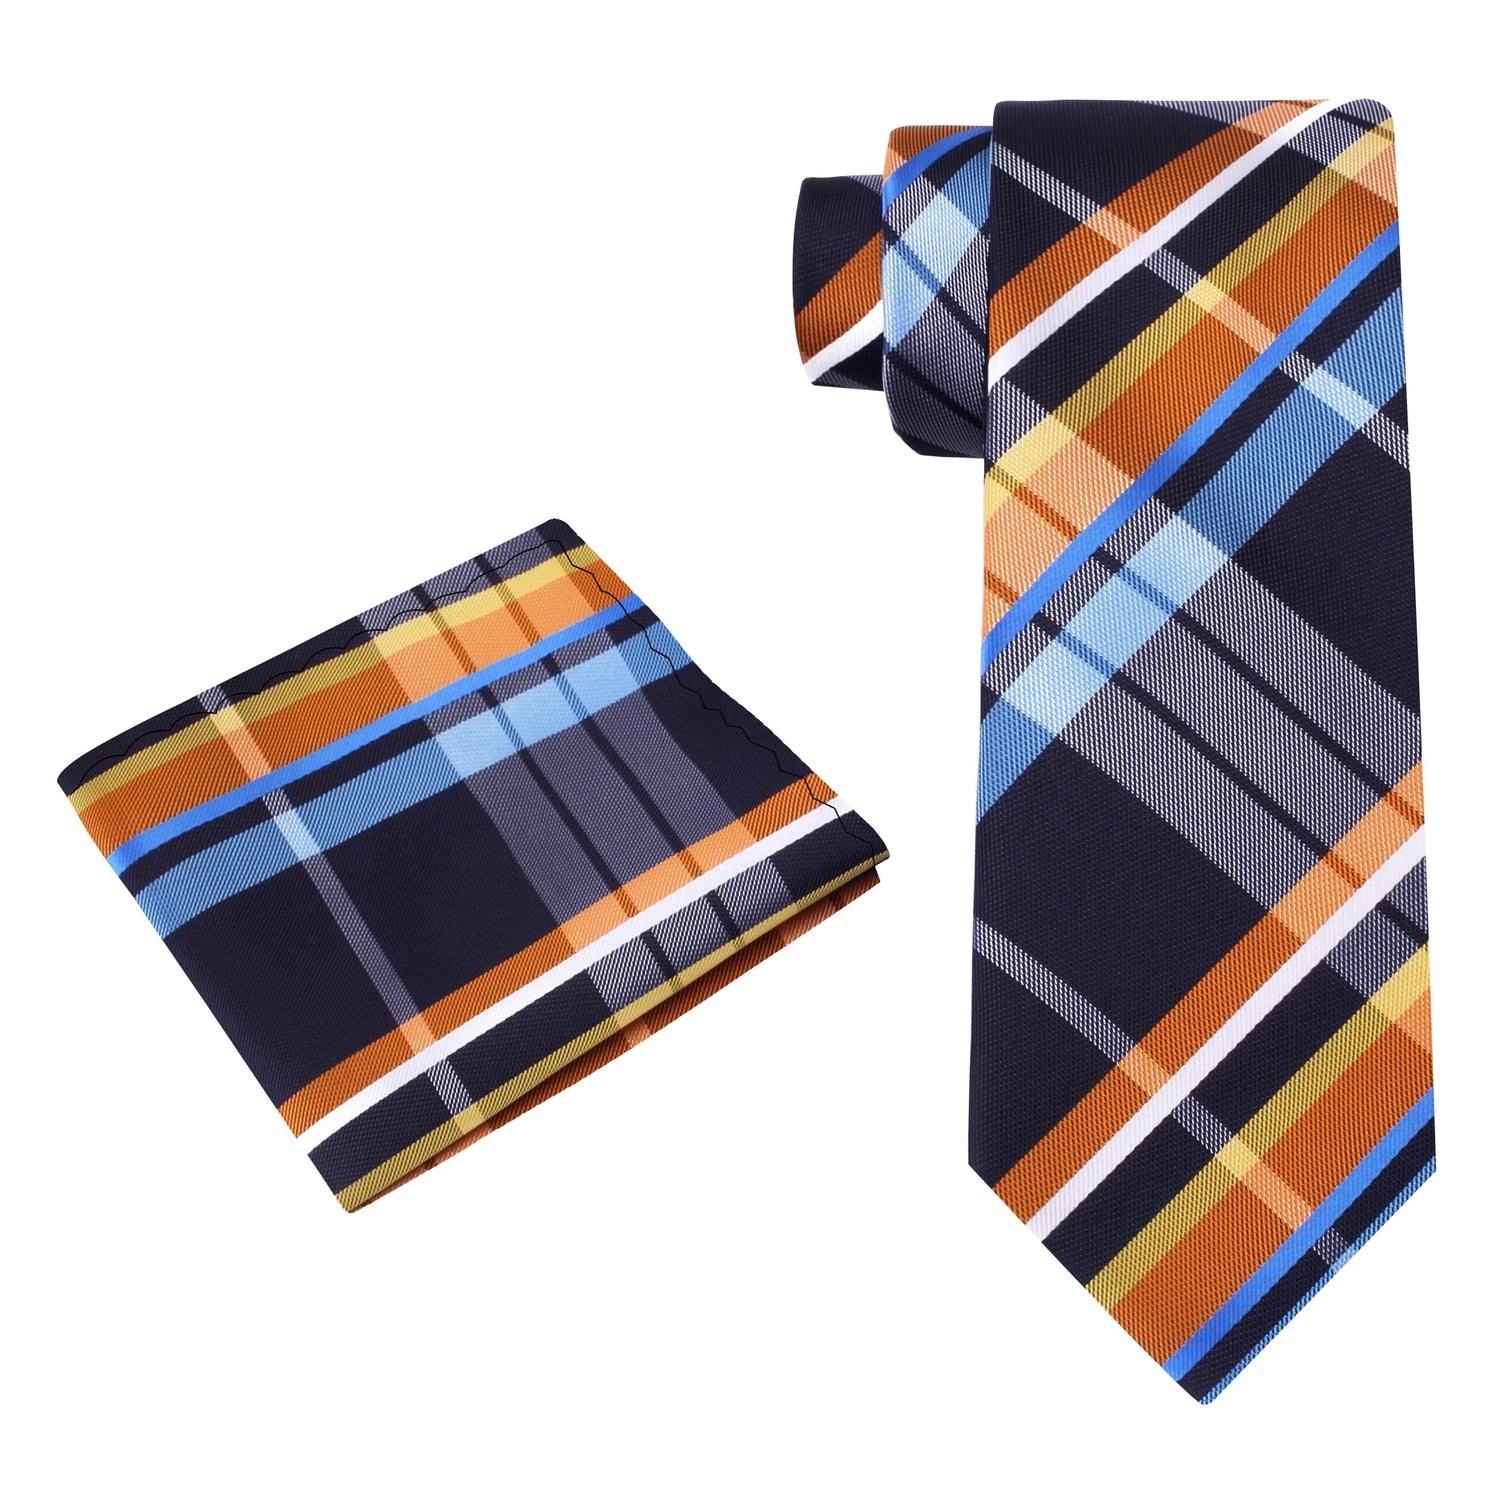 Alt View: A Blue, Orange, Light Blue Plaid Pattern Silk Necktie, Matching Pocket Square